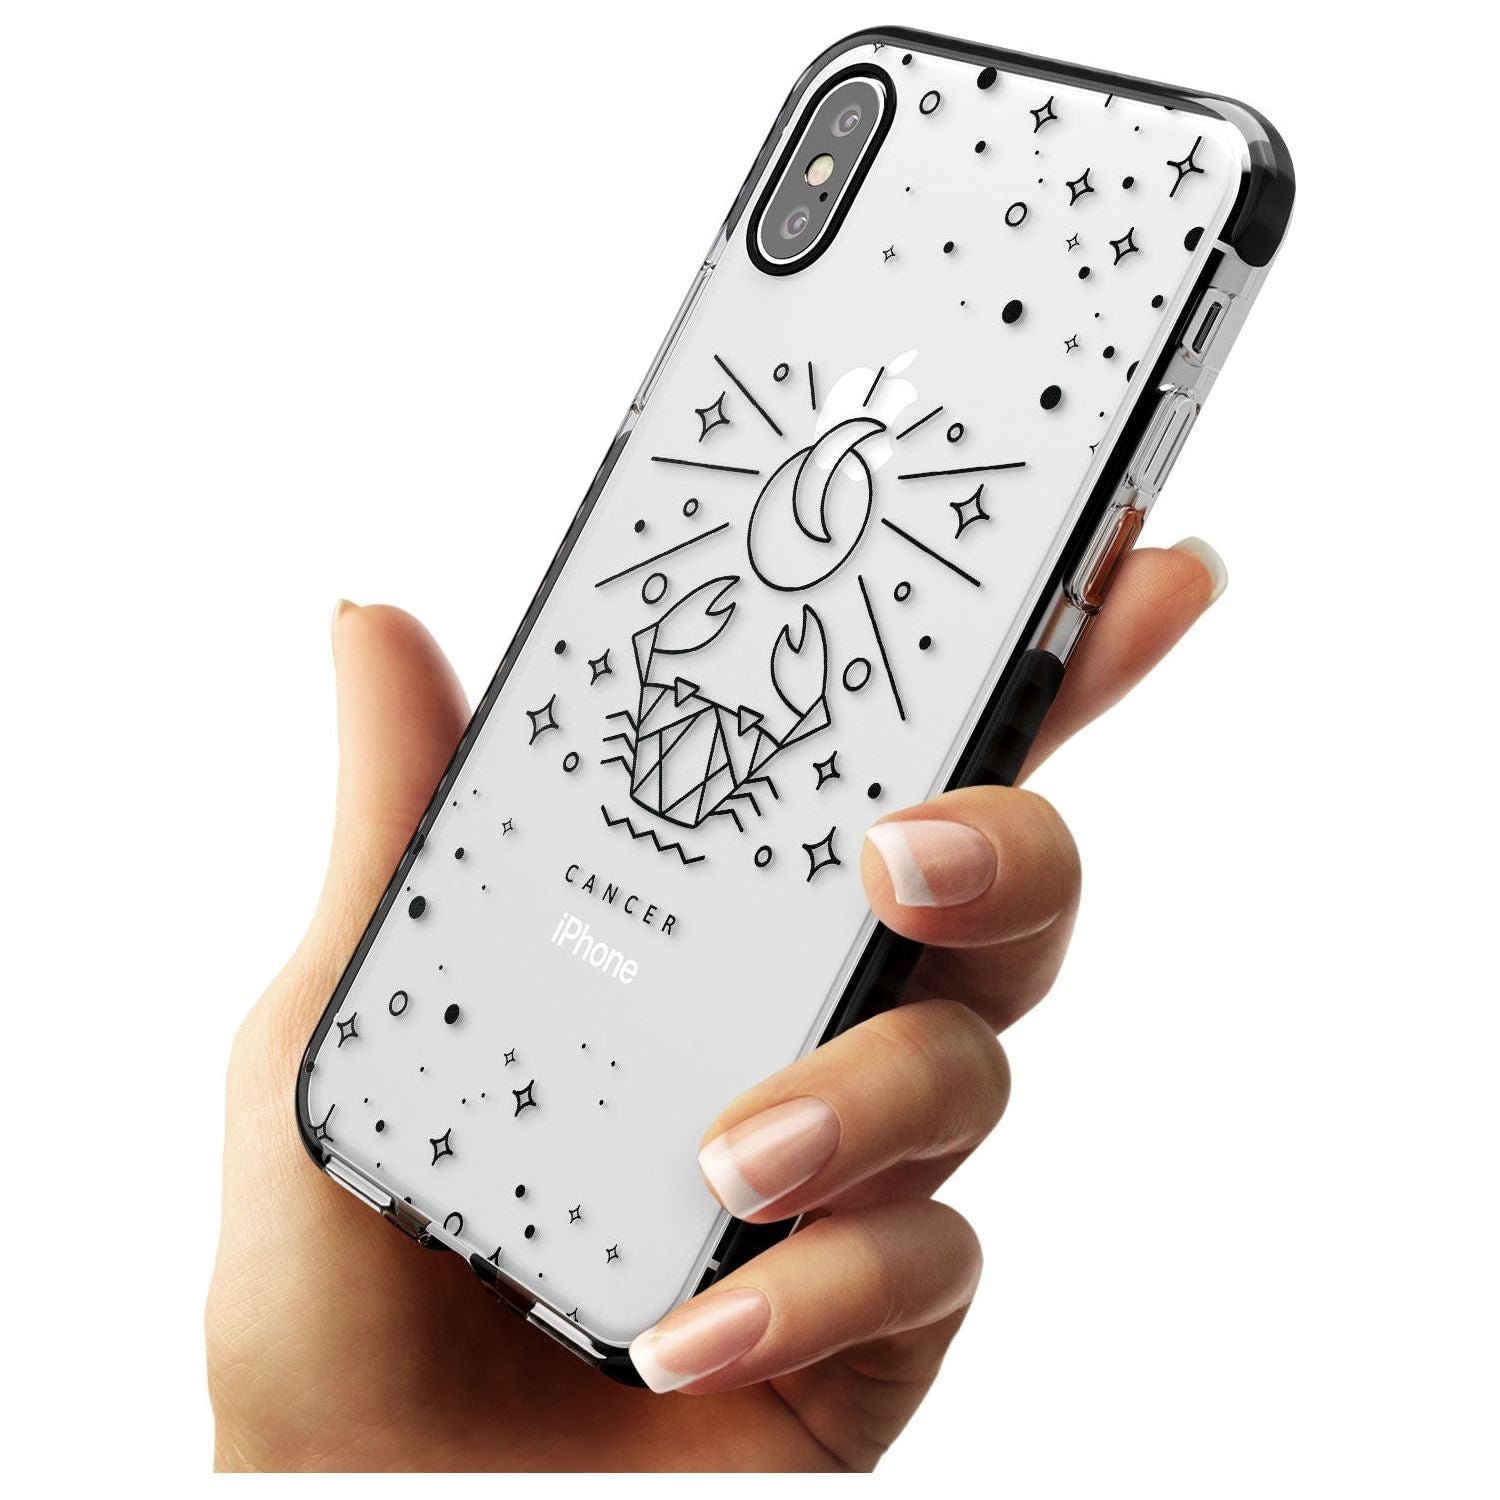 Cancer Emblem - Transparent Design Black Impact Phone Case for iPhone X XS Max XR